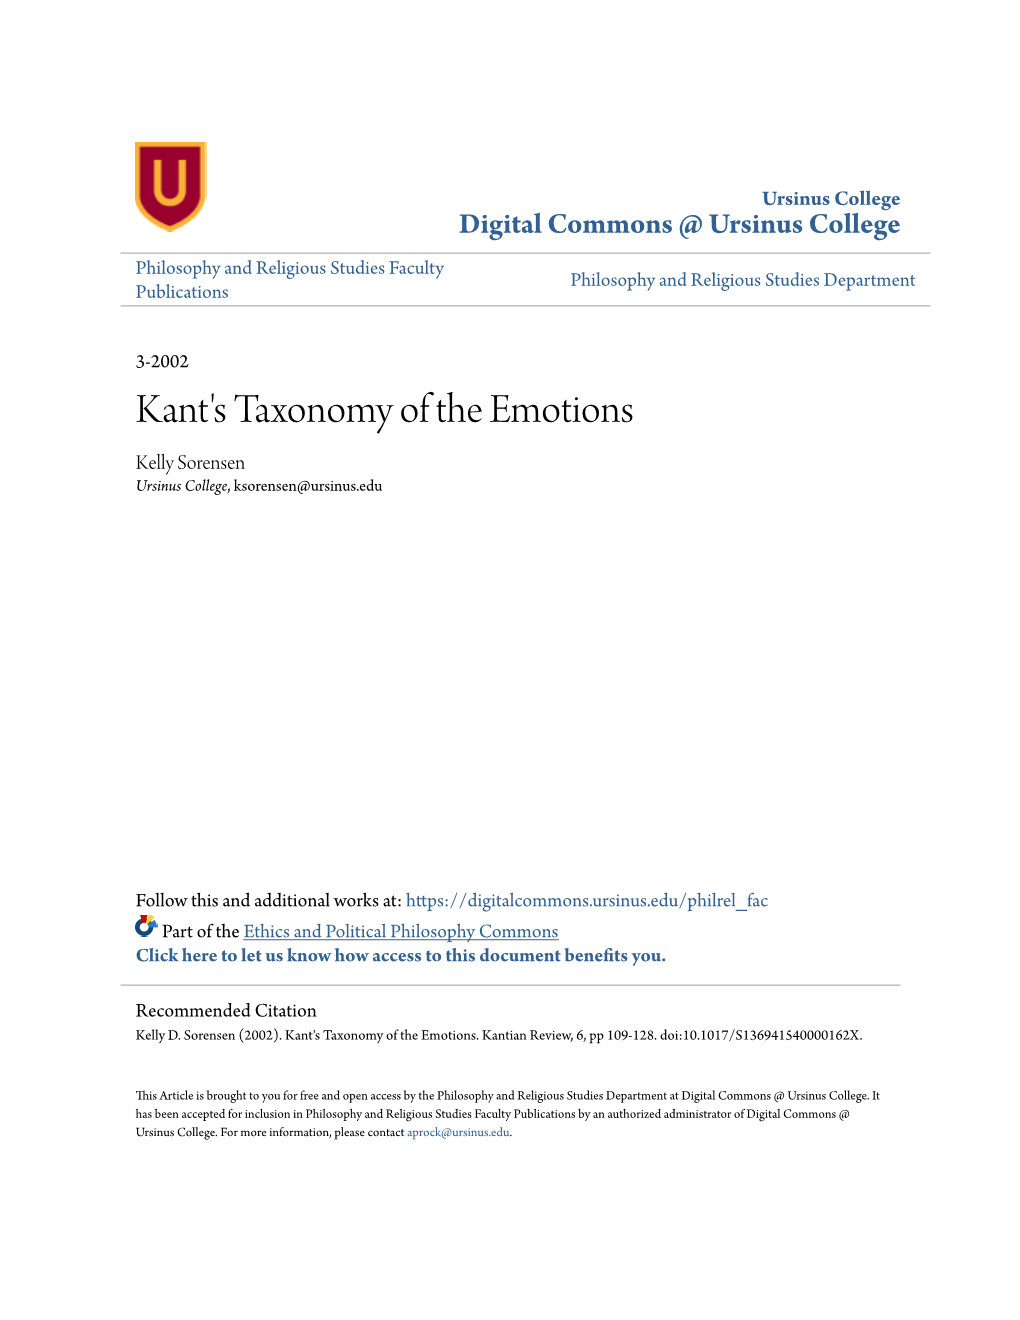 Kant's Taxonomy of the Emotions Kelly Sorensen Ursinus College, Ksorensen@Ursinus.Edu